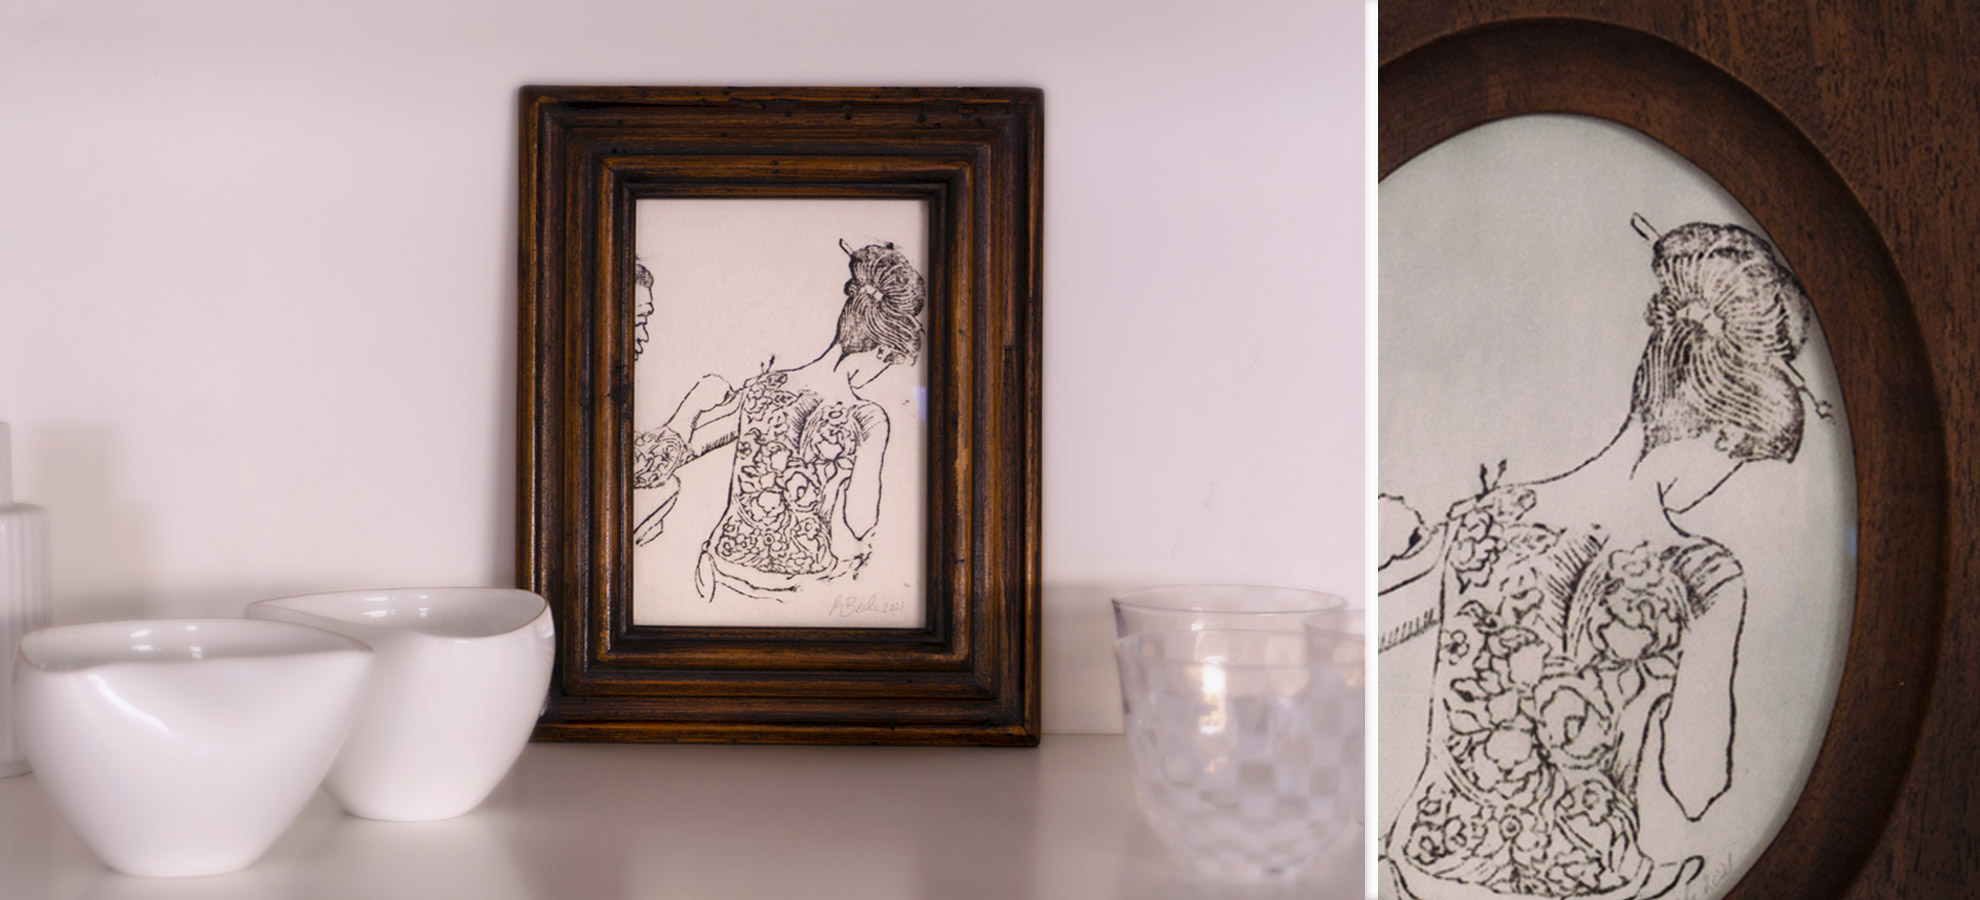 framed mono-prints of a geishas back tattoo